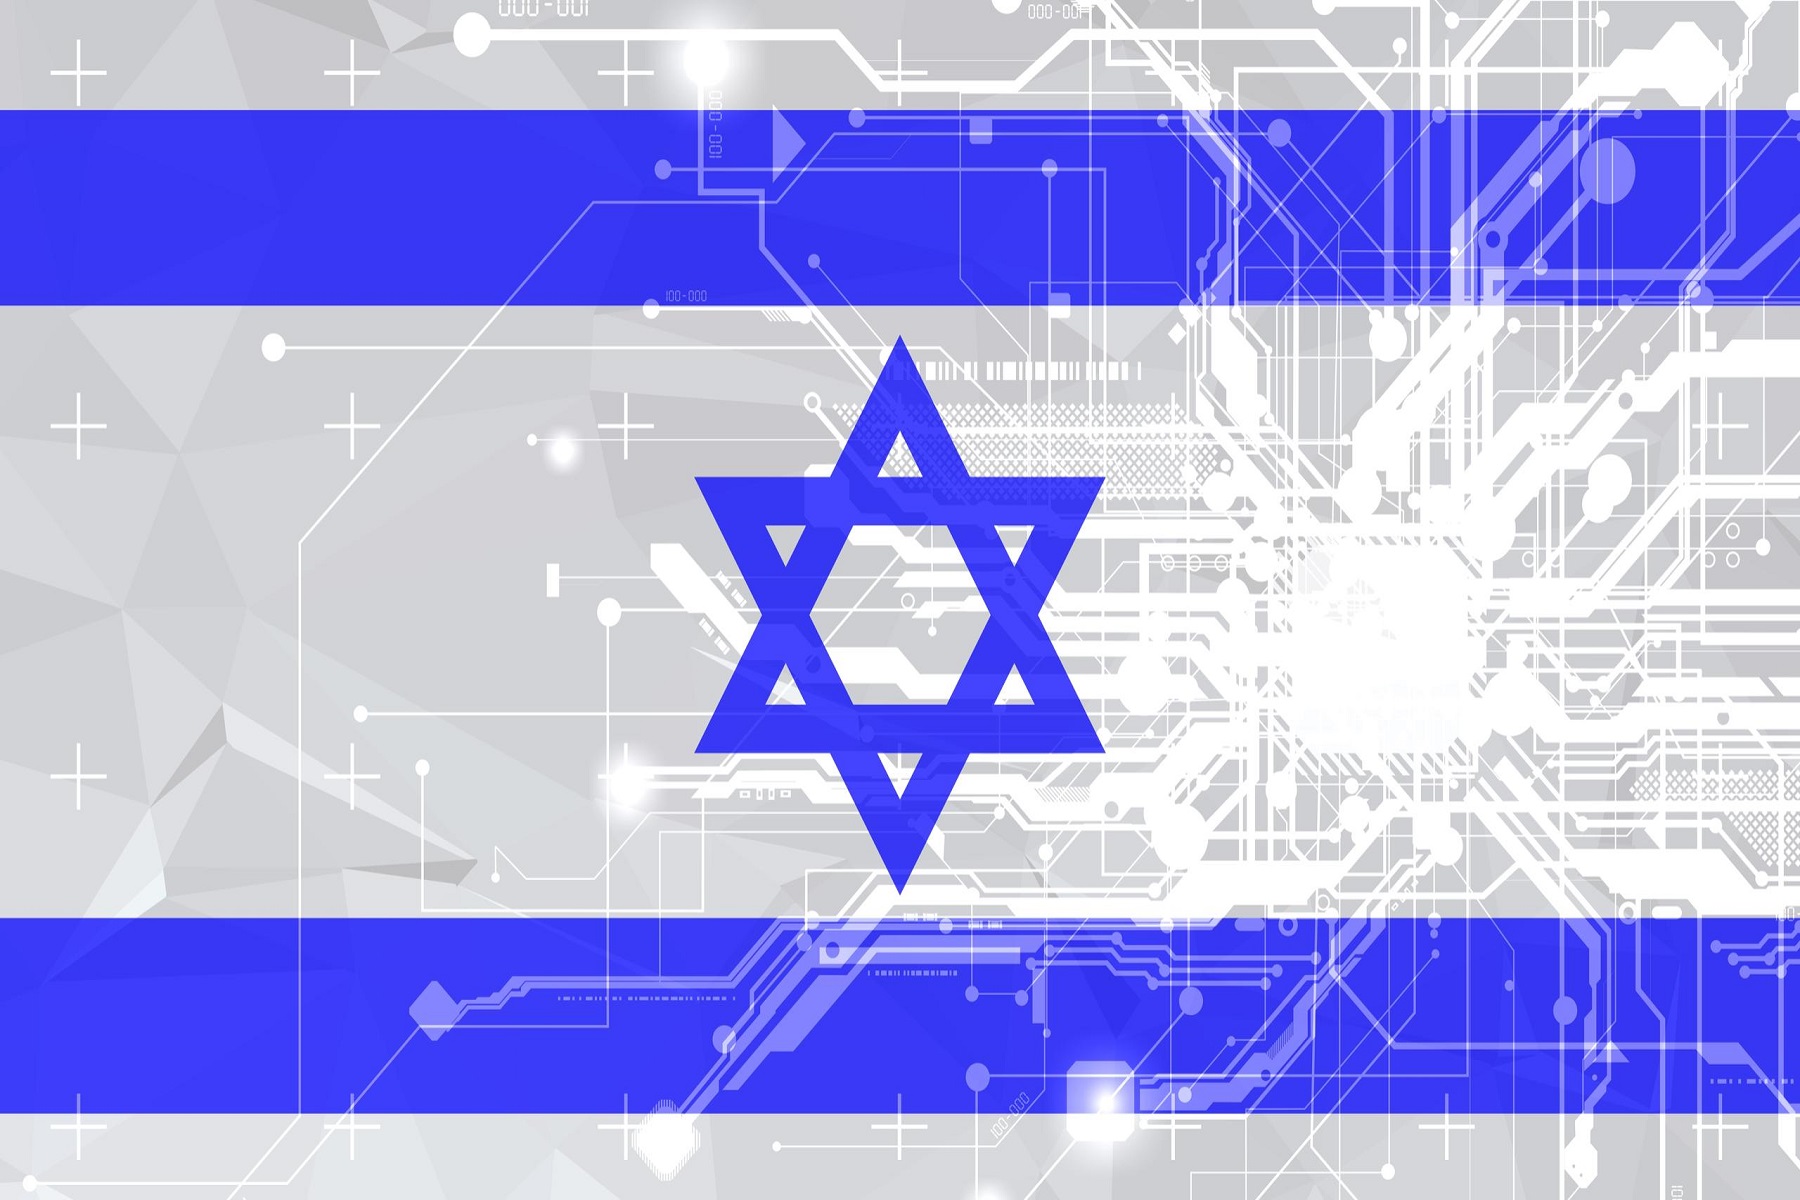 4 Ingredients That Make Israel a Cybersecurity Powerhouse